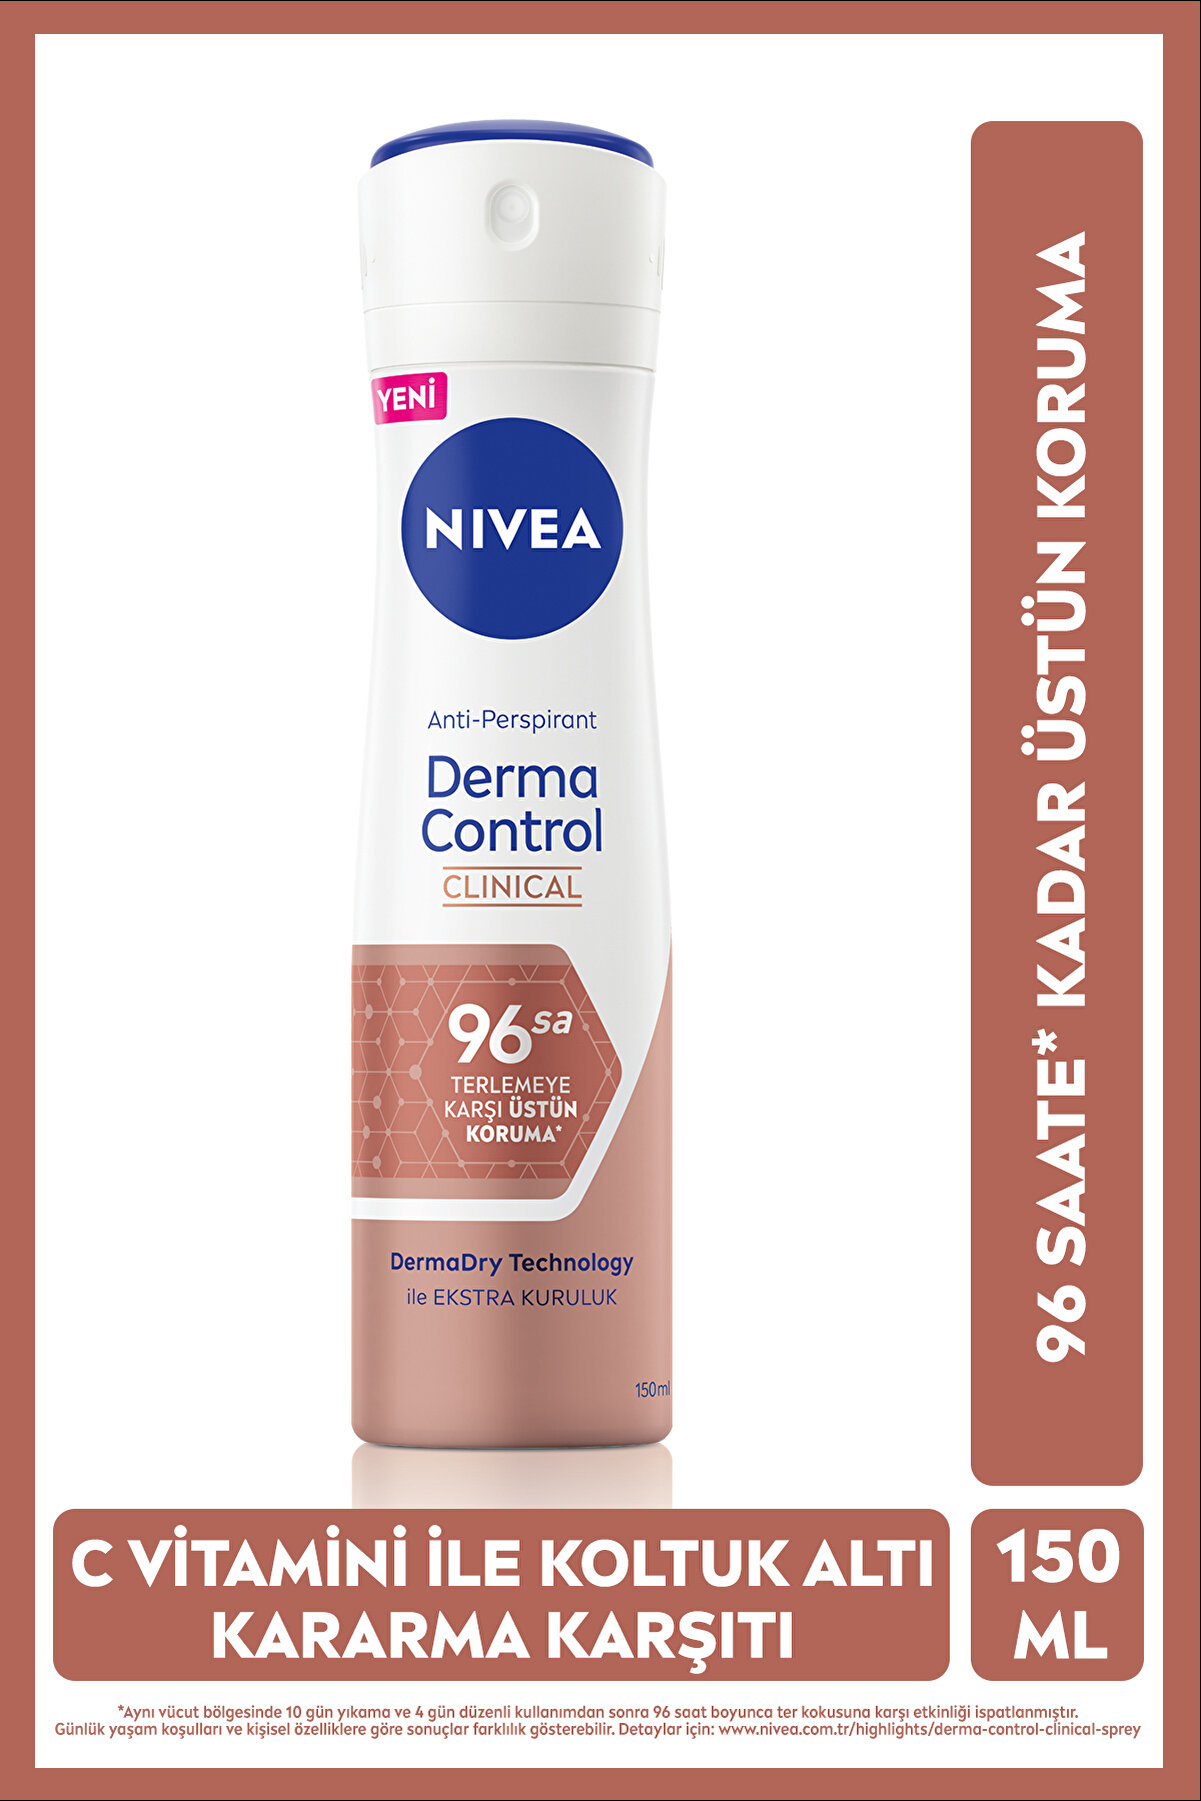 Nivea Kadın Sprey Deodorant Derma Control Clinical 150ml, 96 Saat Koruma, C Vitamini